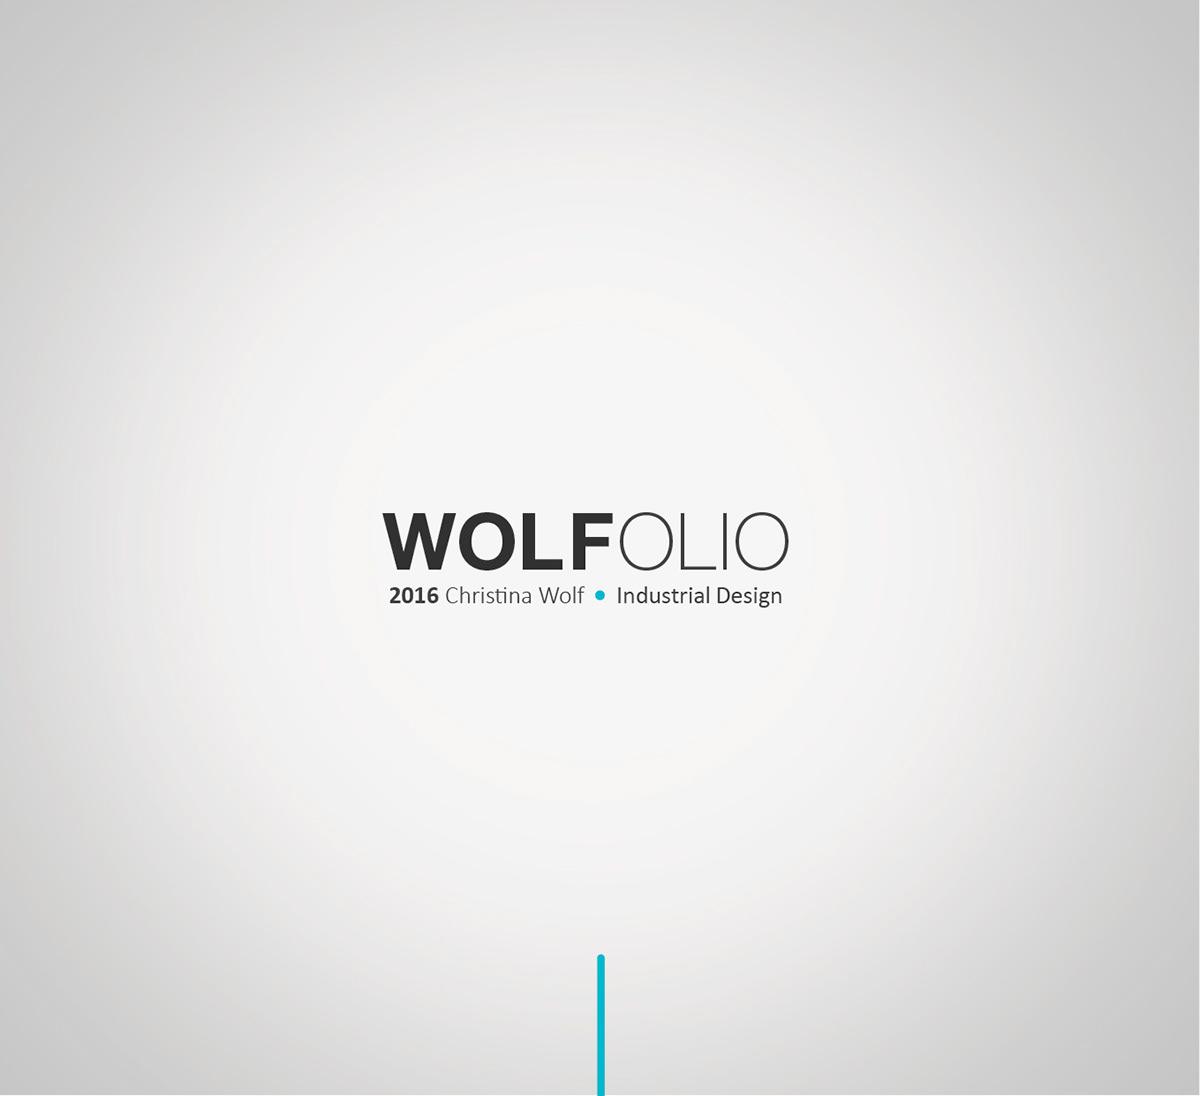 FH Joanneum graz Christina Wolf Wolfolio portfolio